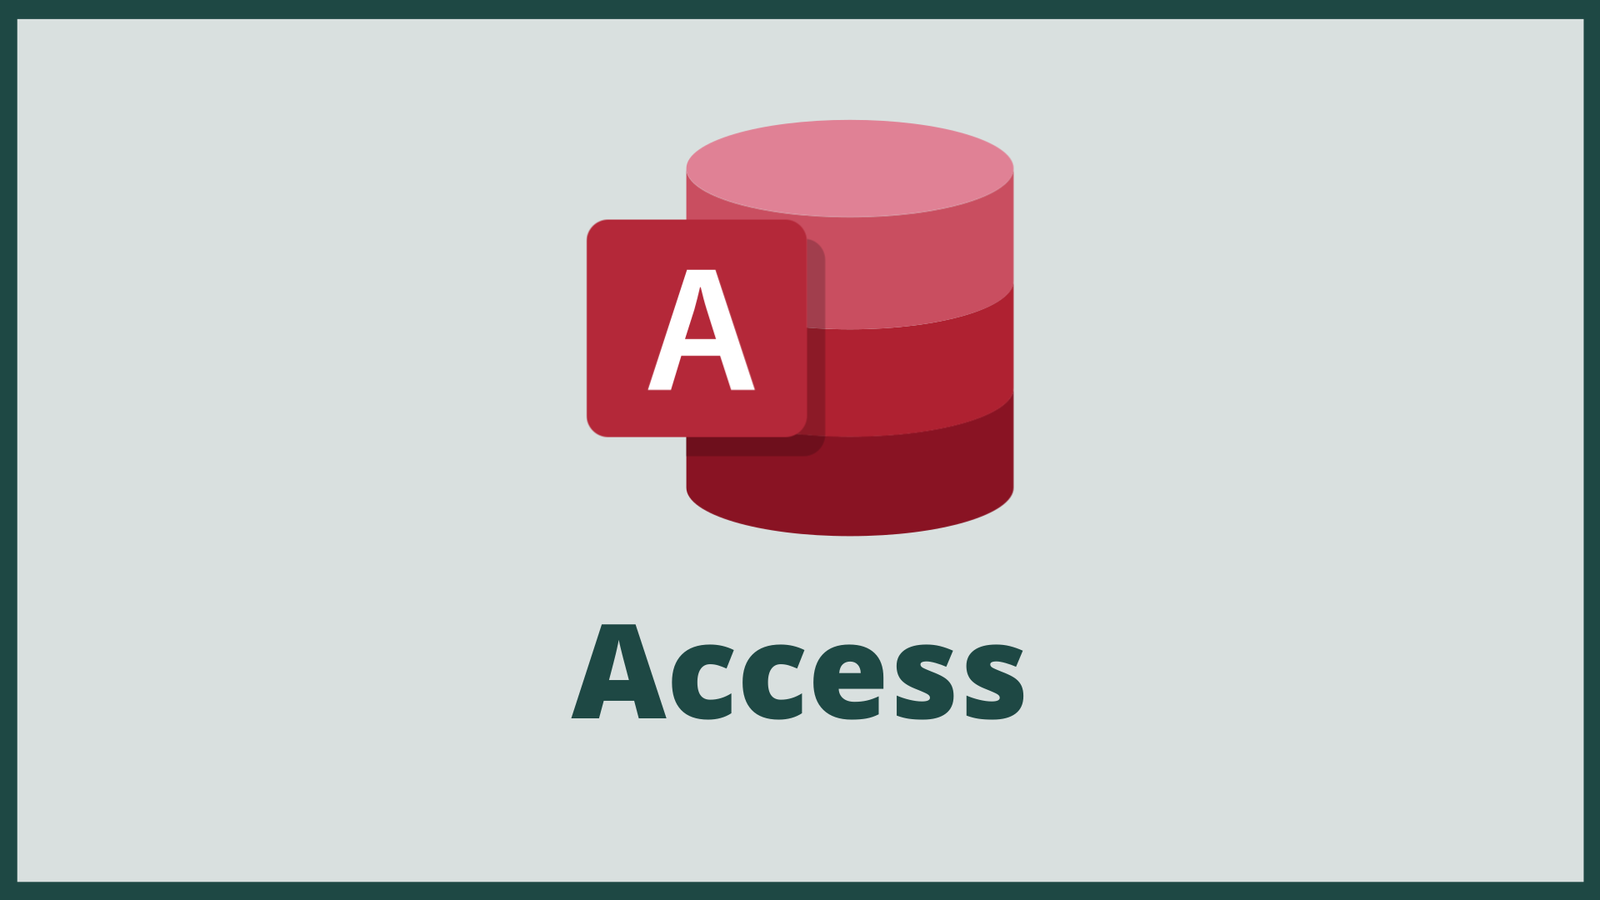 Access courses